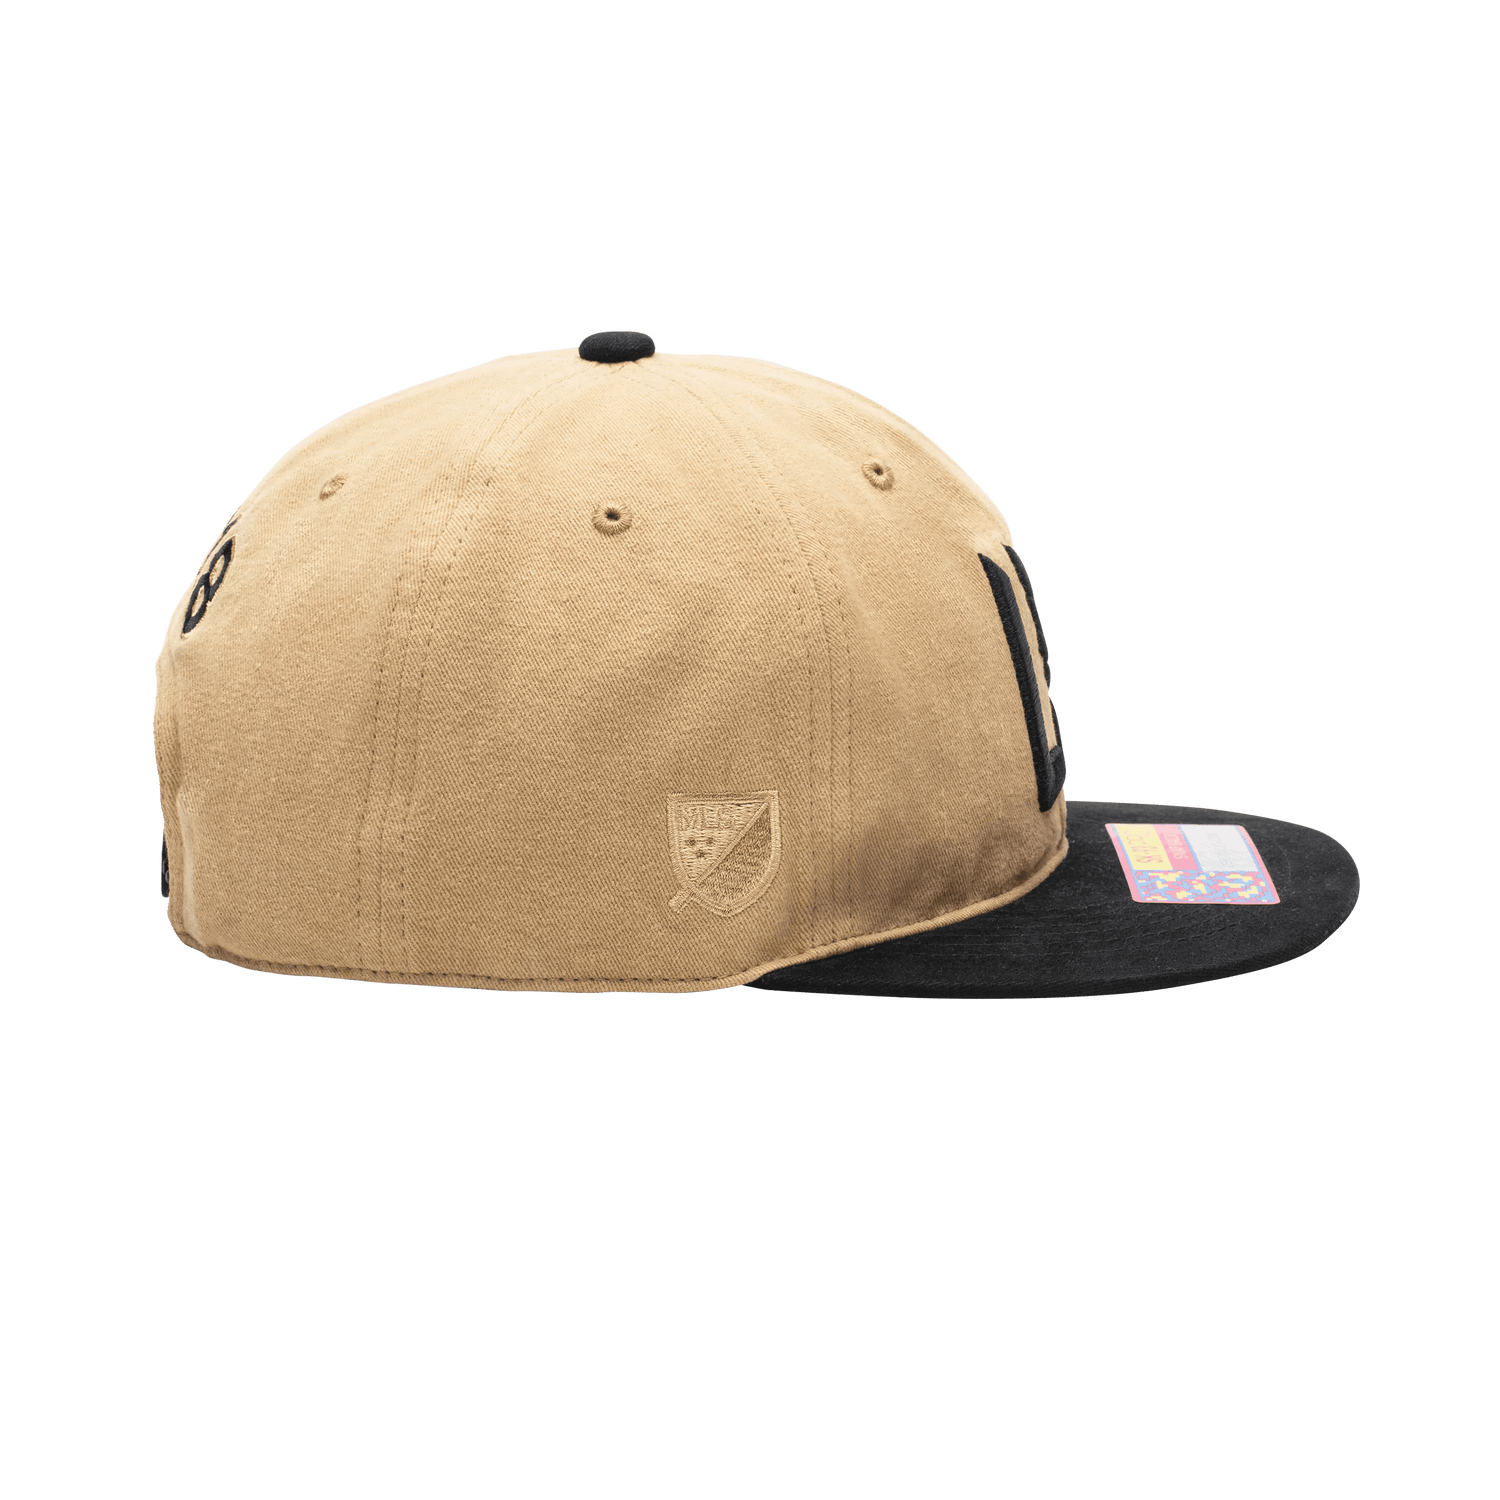 FI Collection LAFC Swingman Snapback Hat (Side 2)